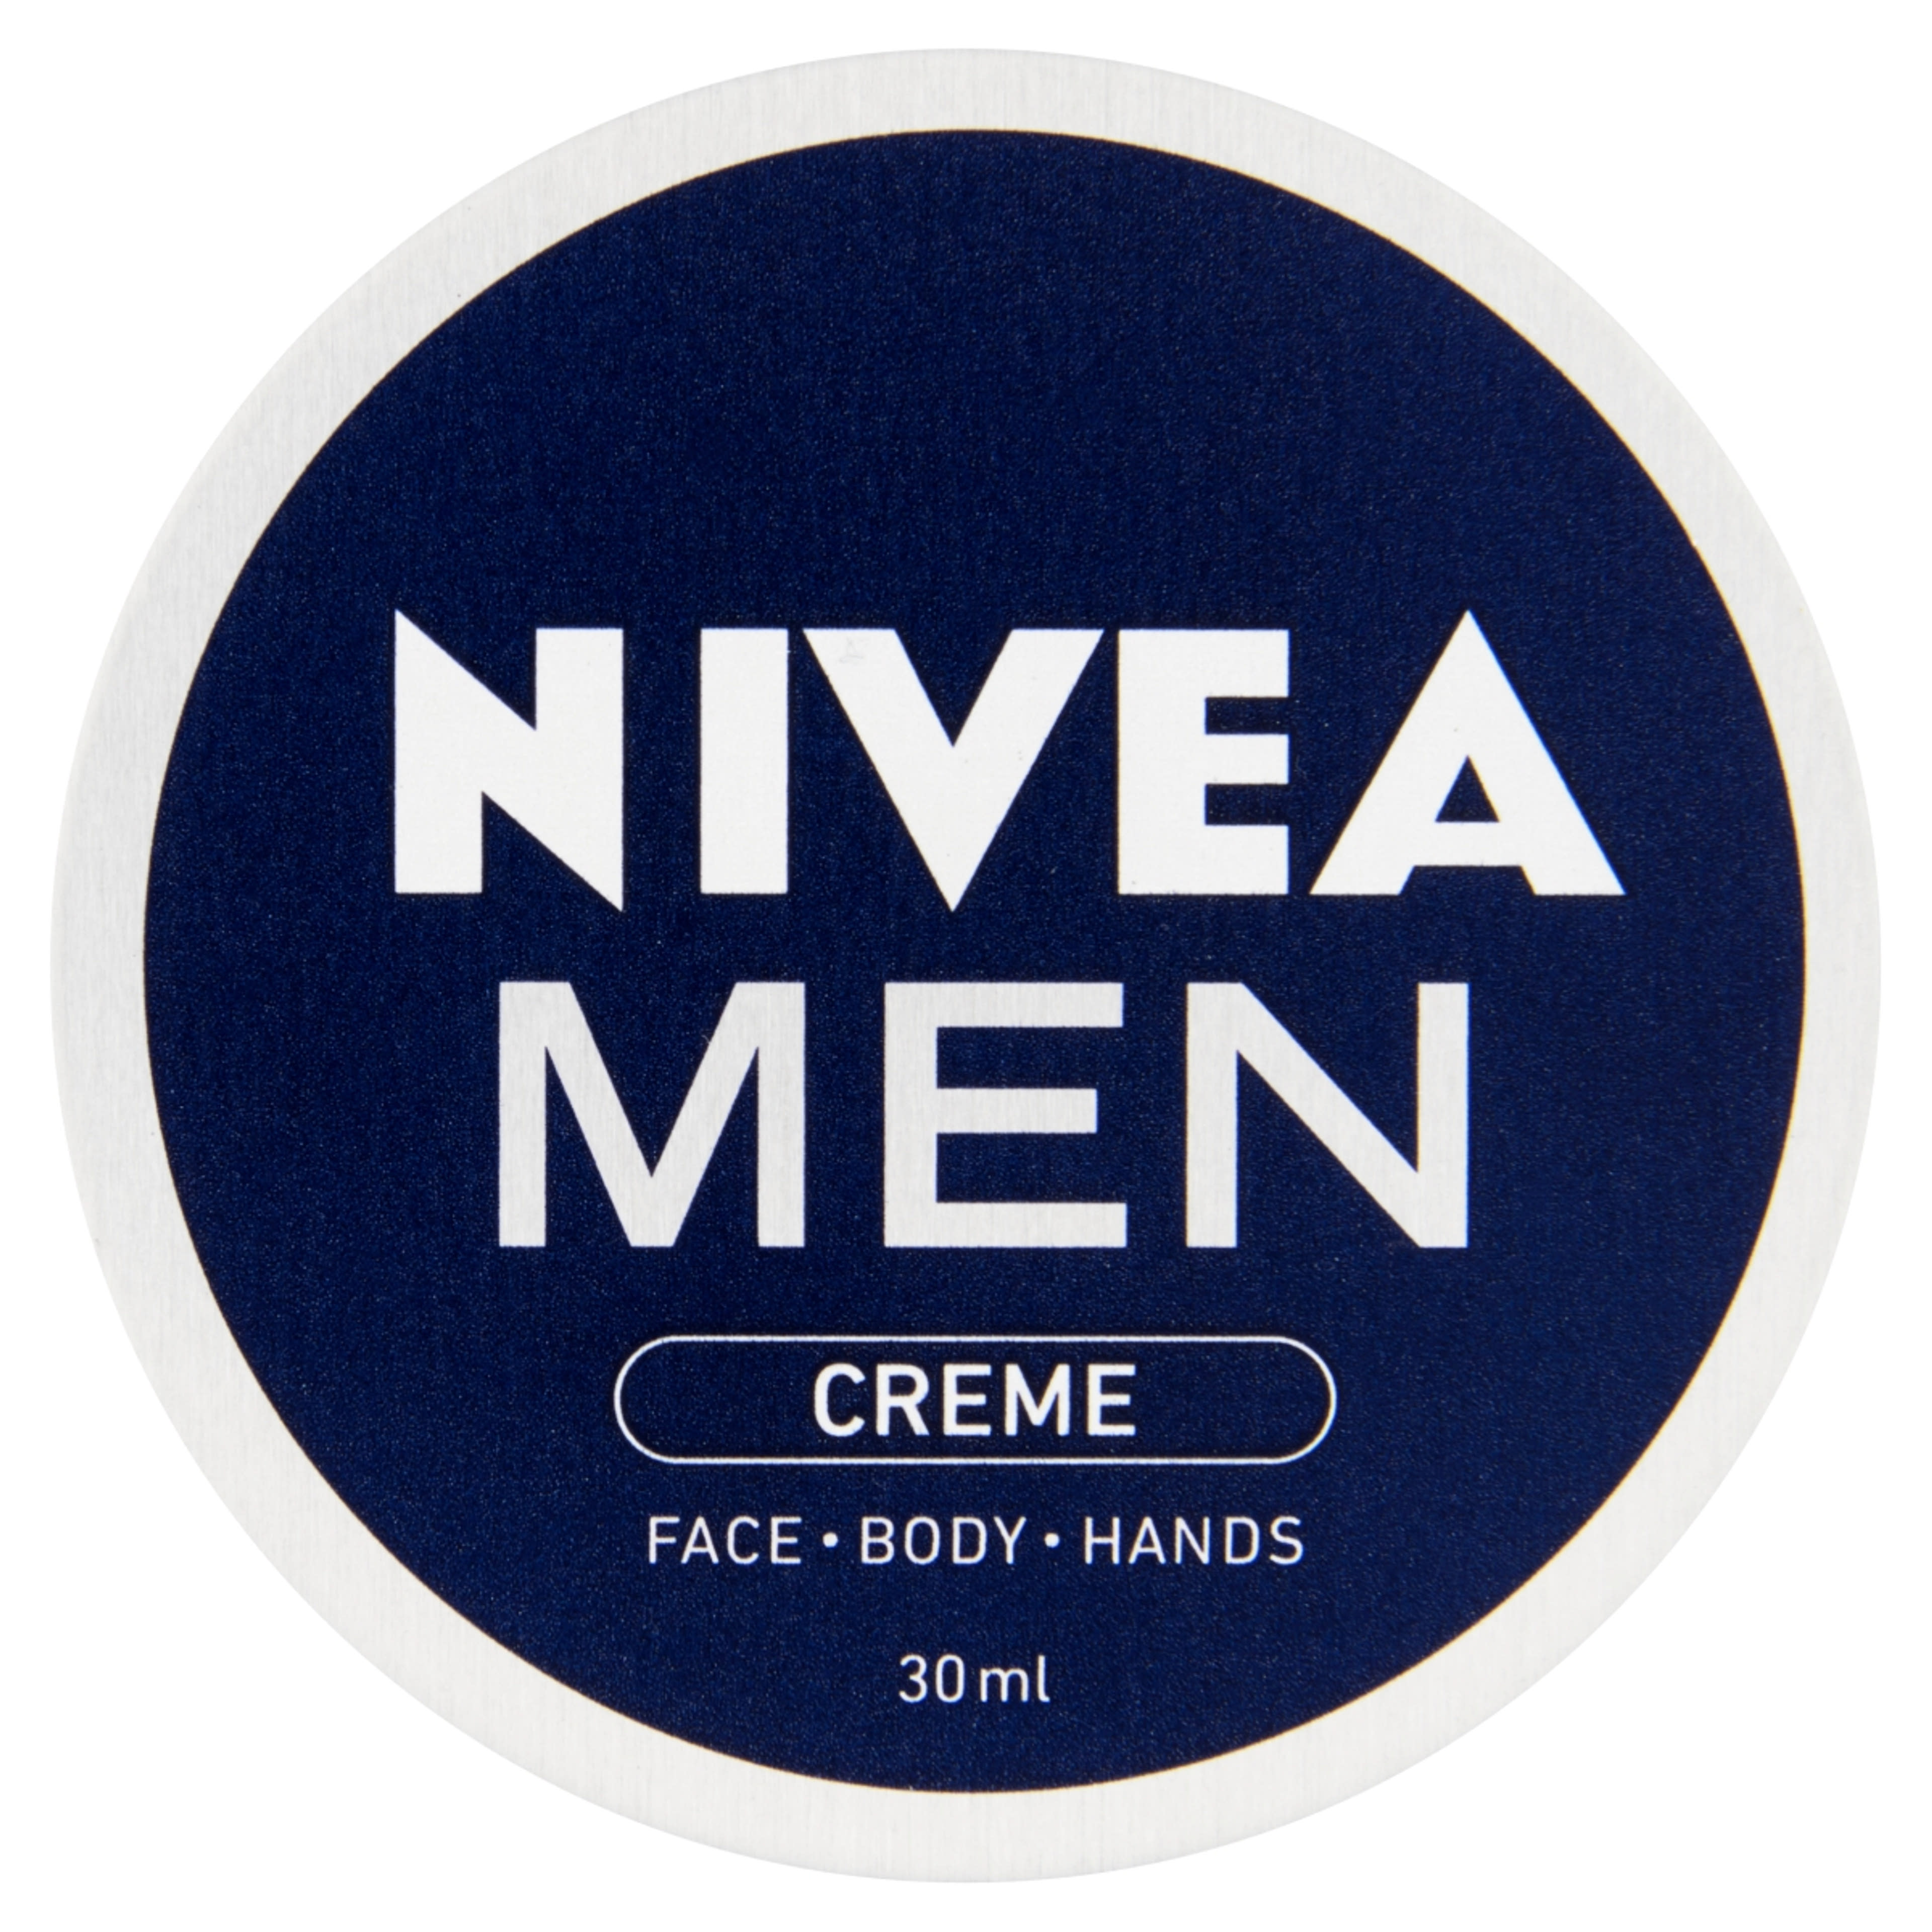 NIVEA MEN Creme - 30 ml-1